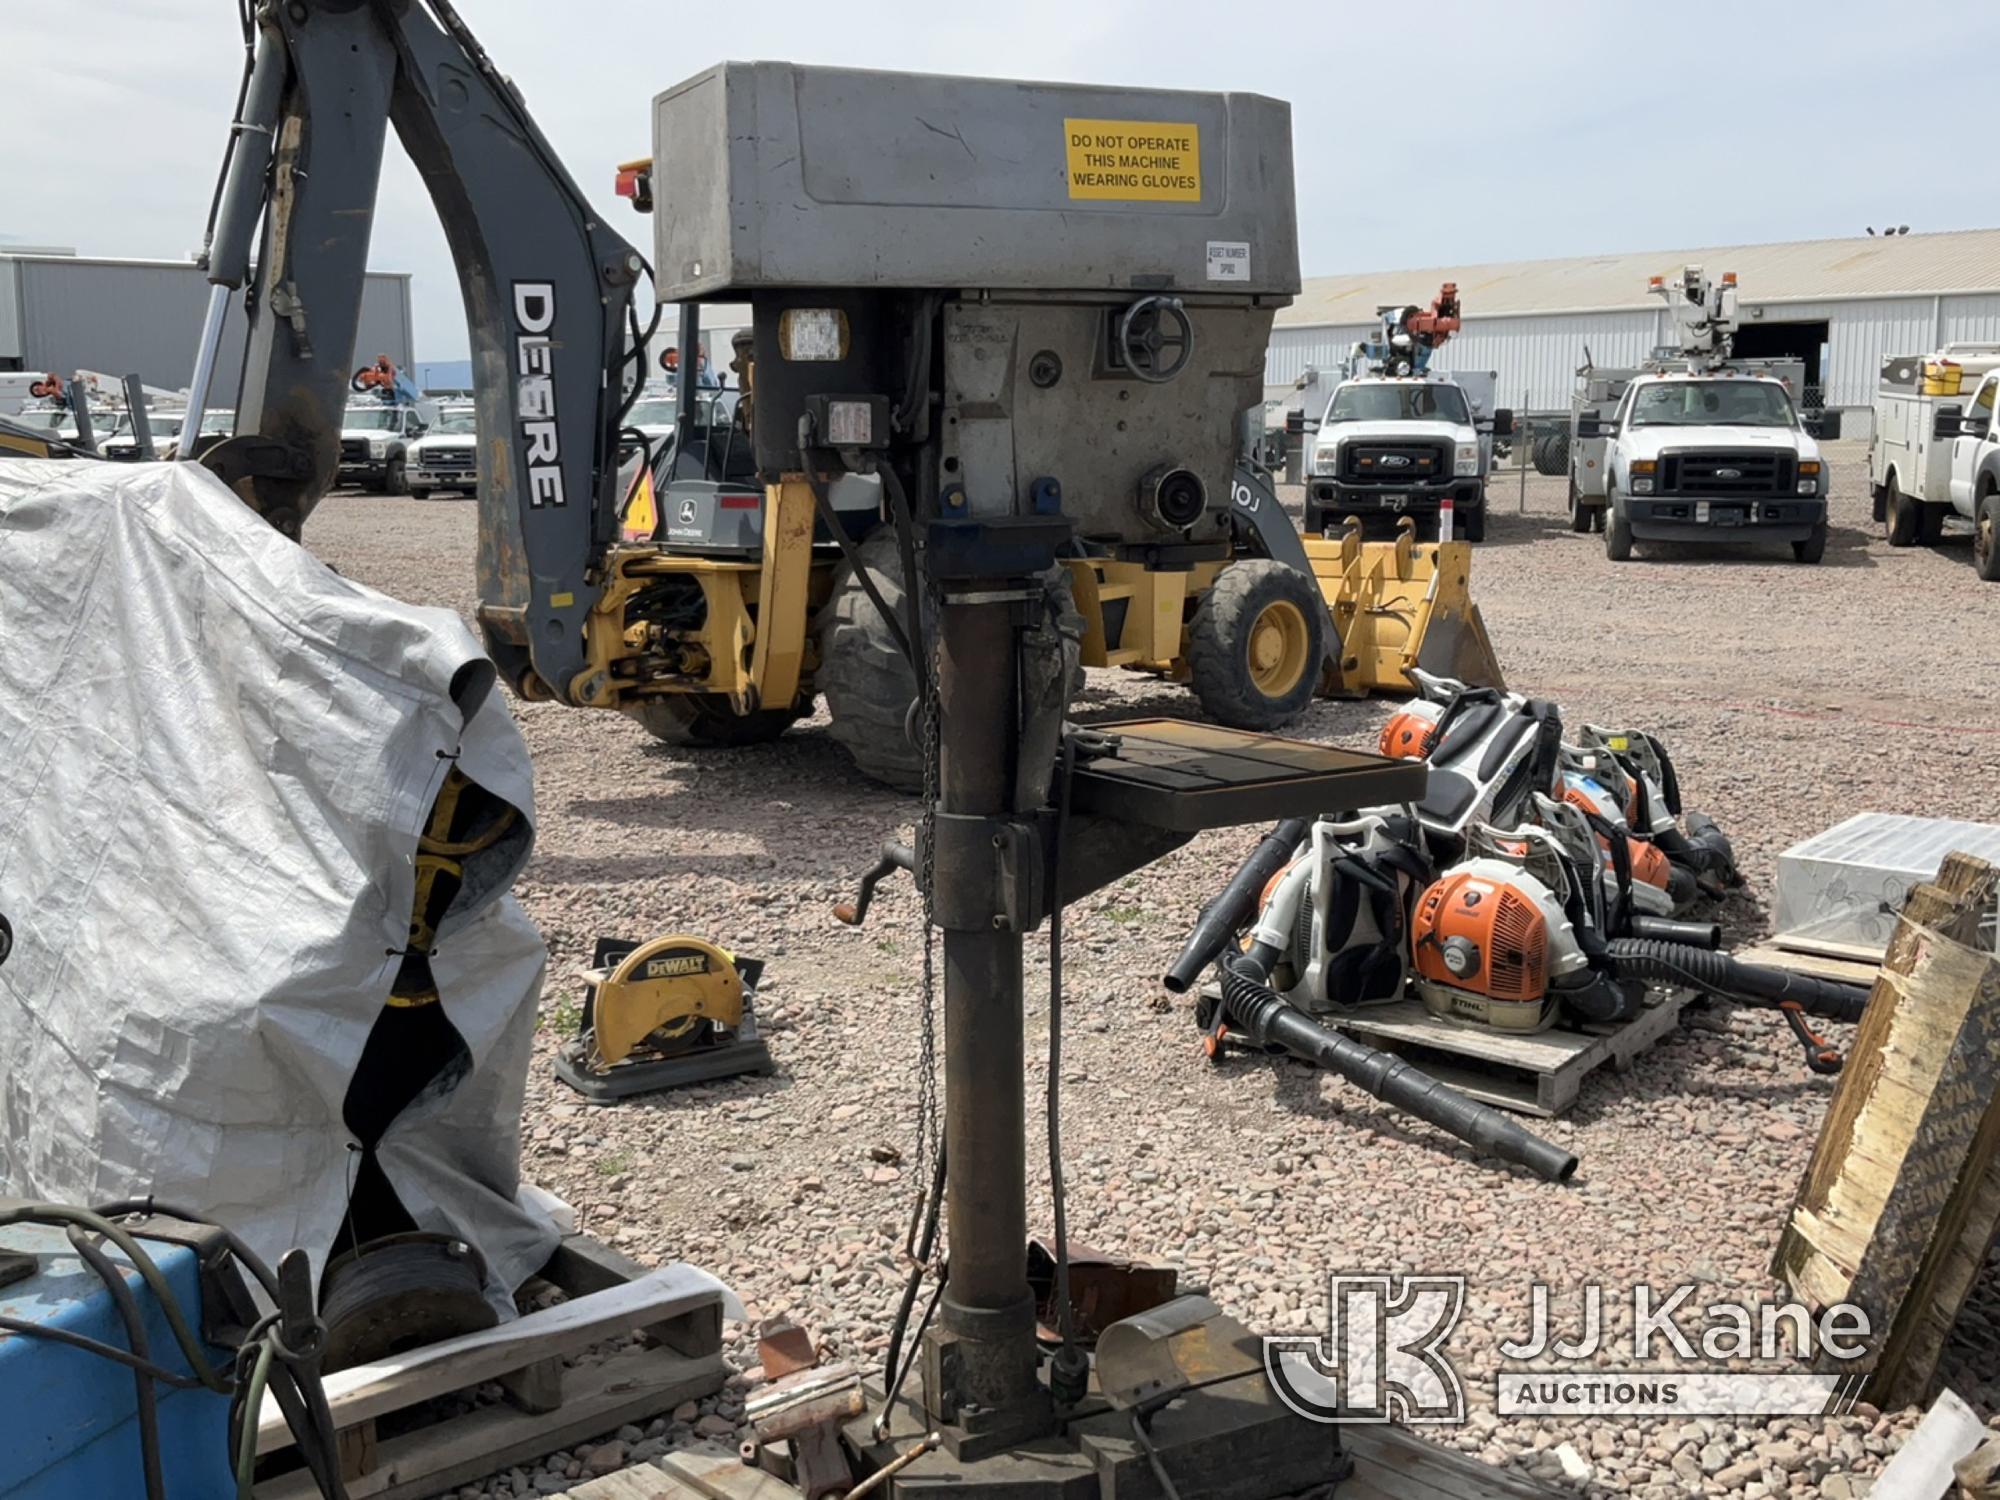 (Dixon, CA) Wilton Variable Speed Drill Press (Worn Worn, Rust Damage, Operation Status Unknown